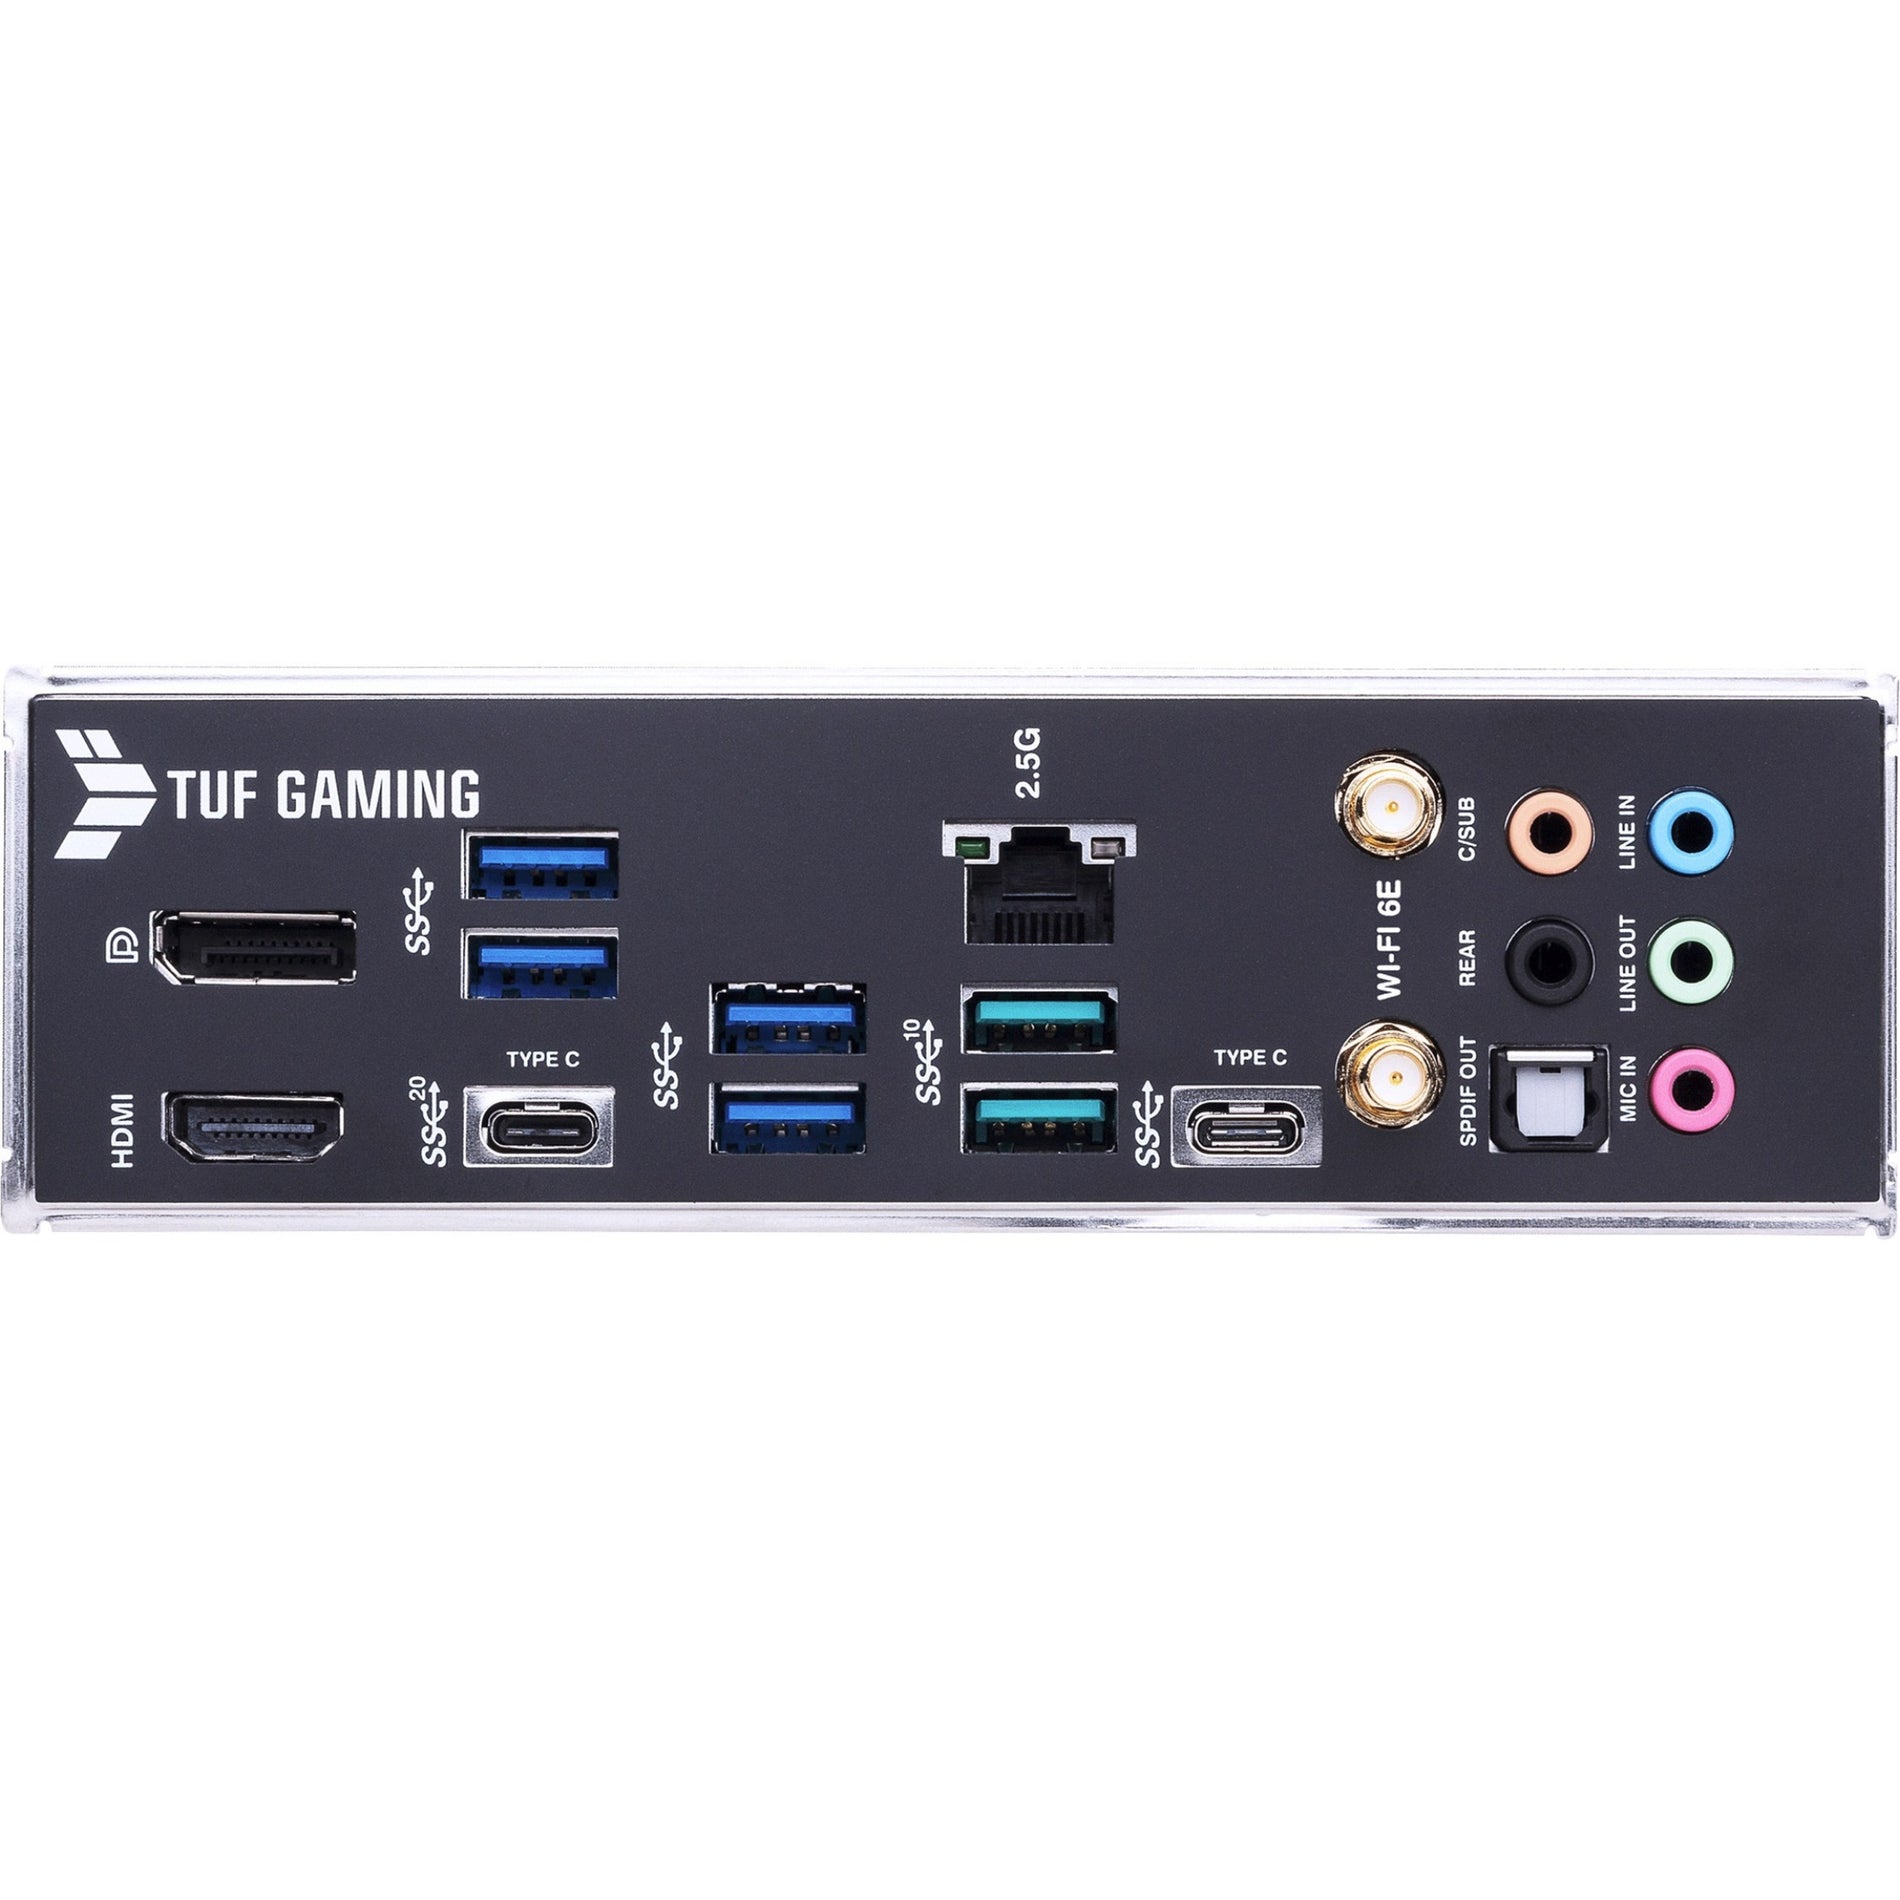 ASUS Motherboard TUF GAMING Z690-PLUS WIFI Gaming Desktop Motherboard, LGA 1200, USB 3.2